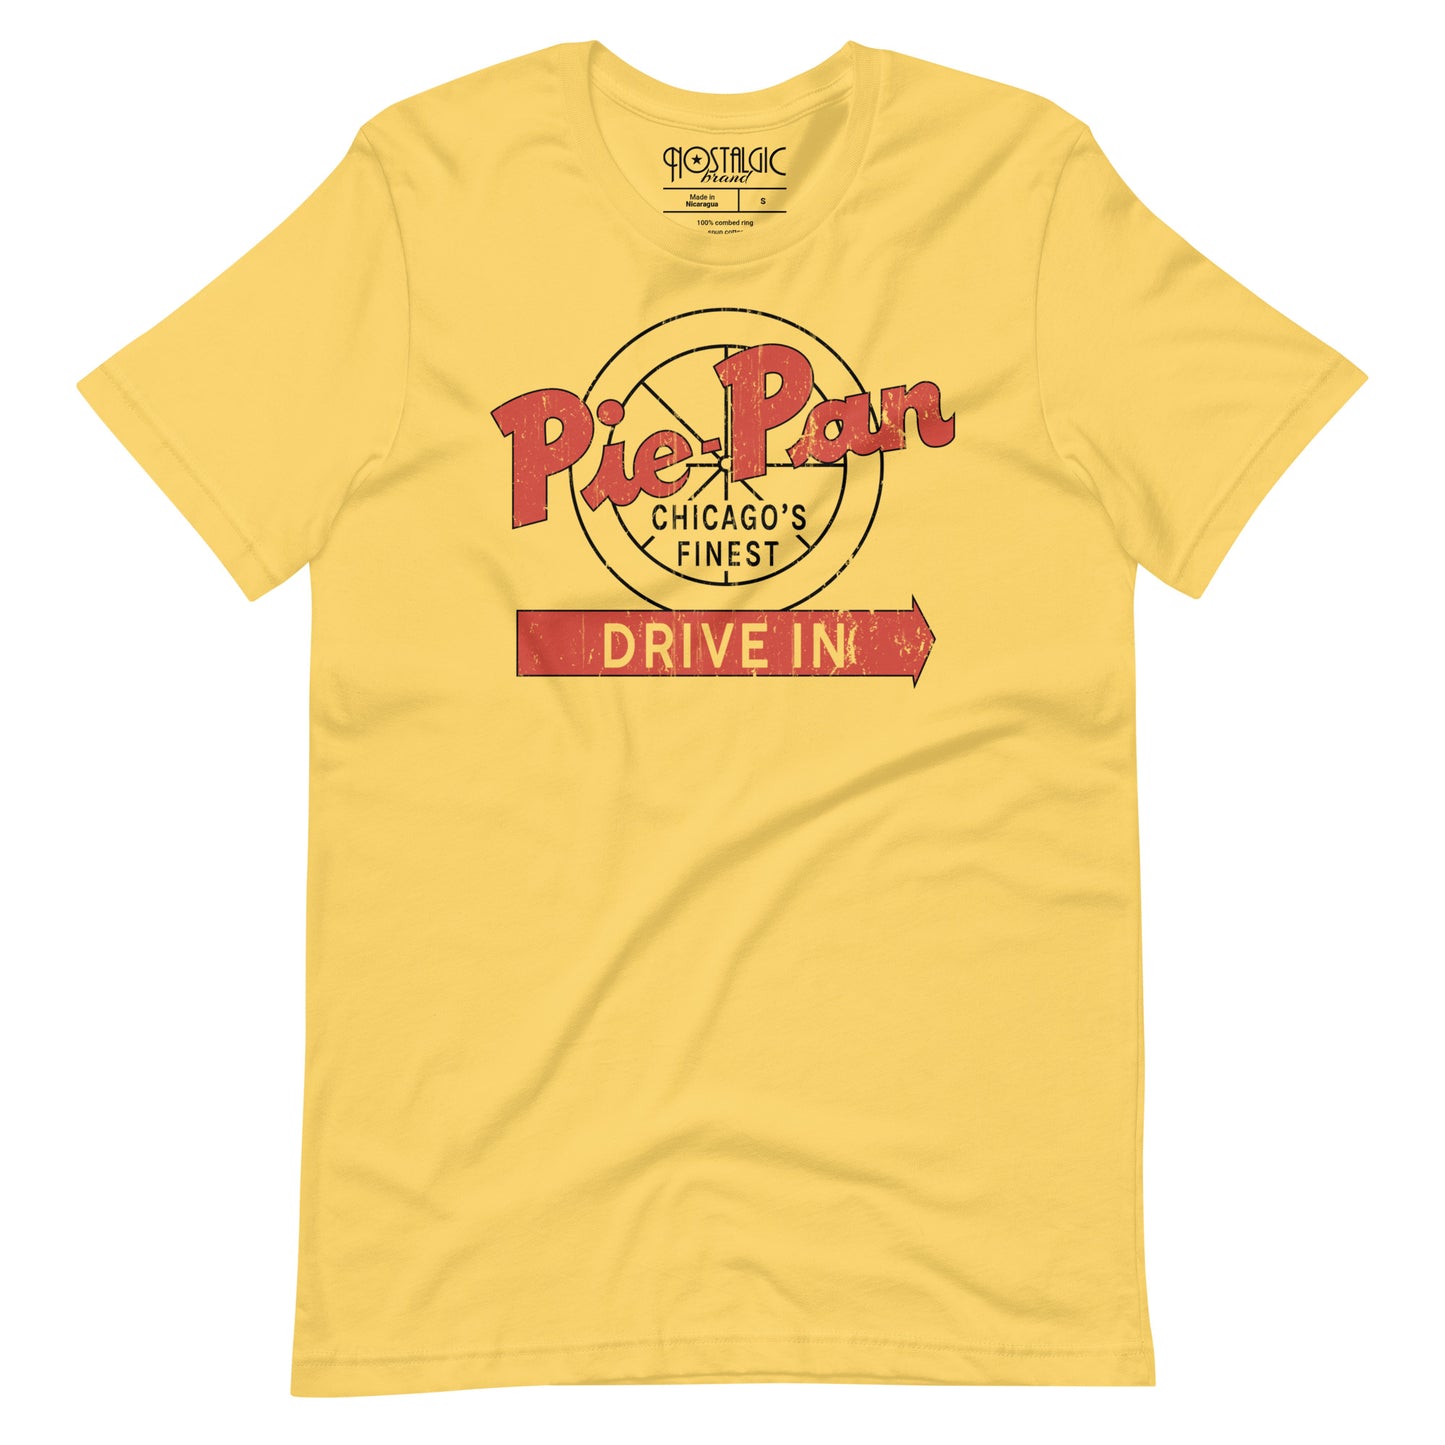 Pie-Pan Drive-In